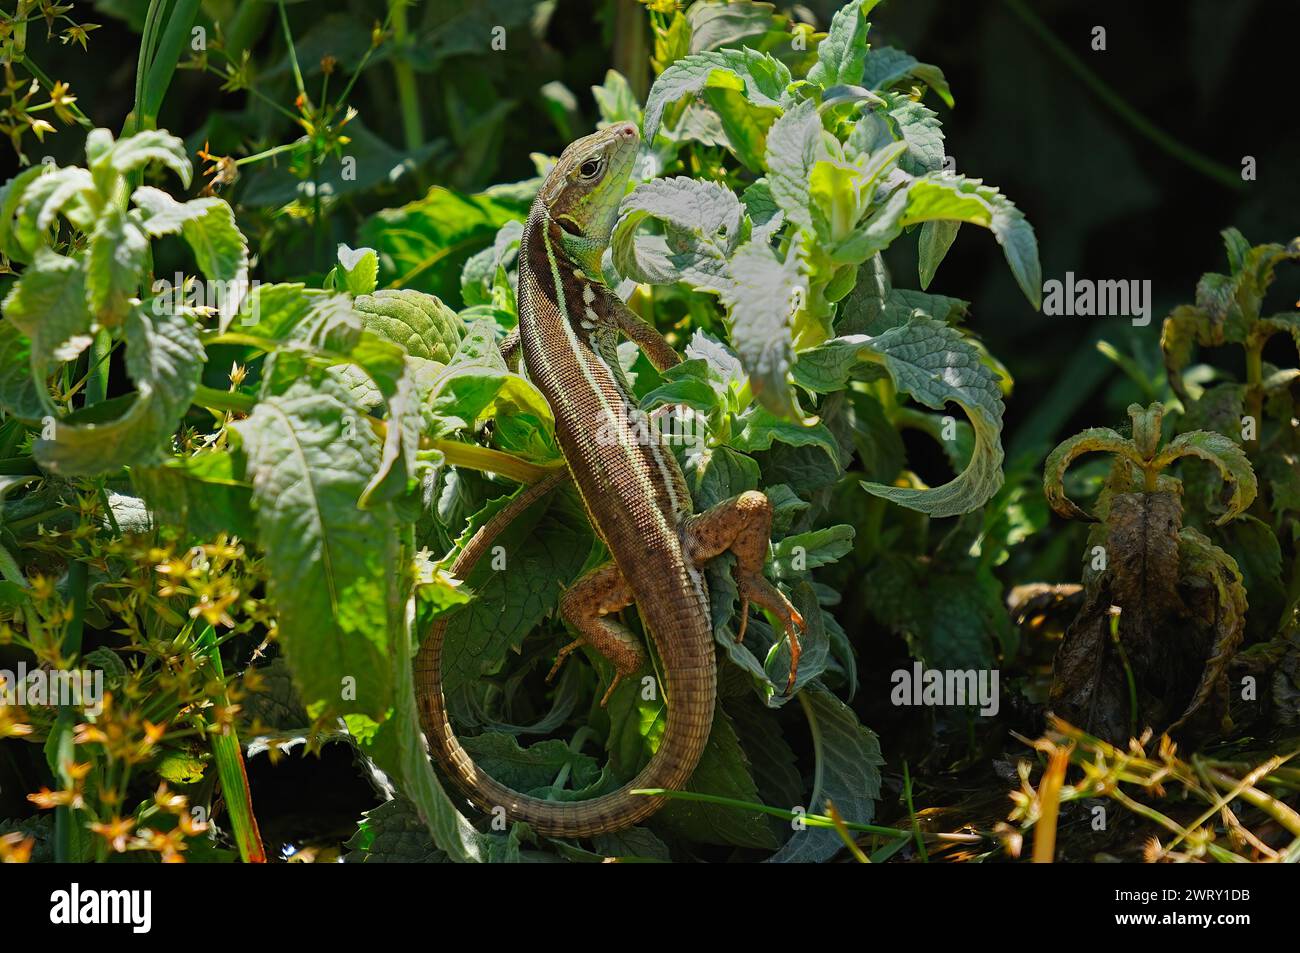 Balcan-grüne Eidechse oder lacerta trilineata im Gras. Stockfoto